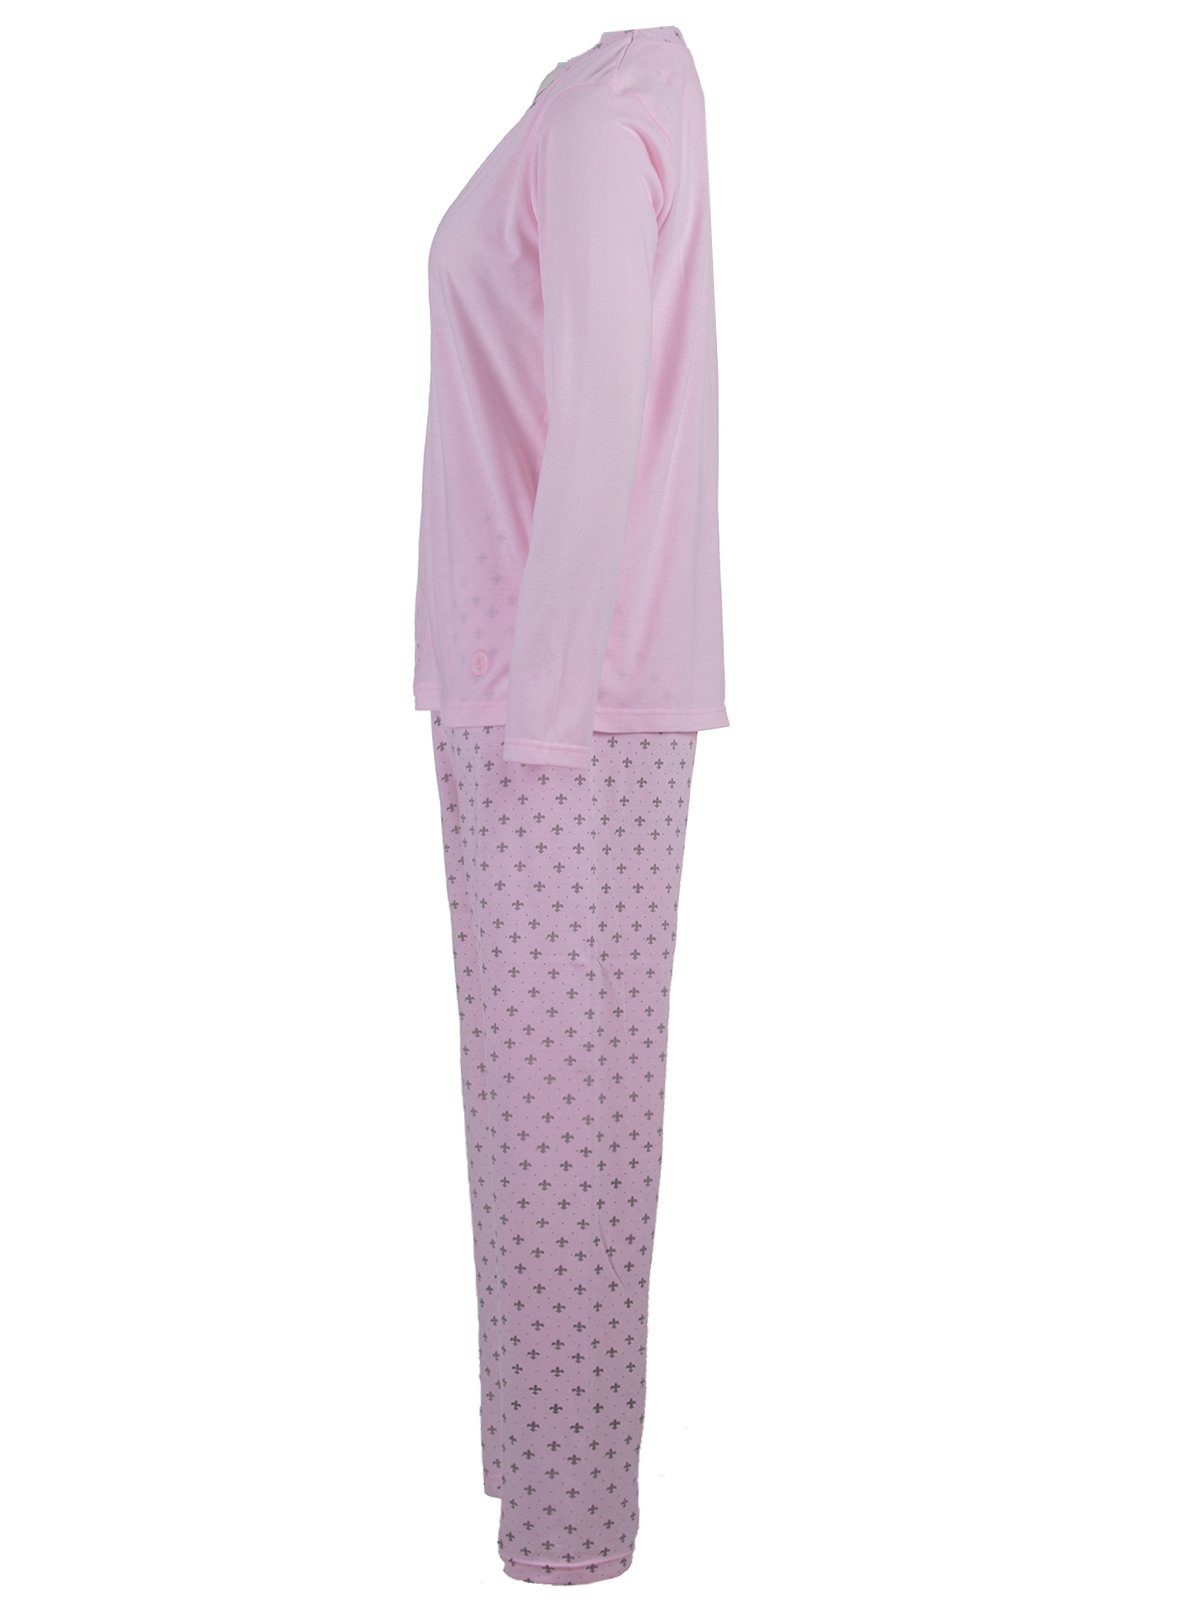 zeitlos Schlafanzug Pyjama Set Langarm Lilie rosa - Borte